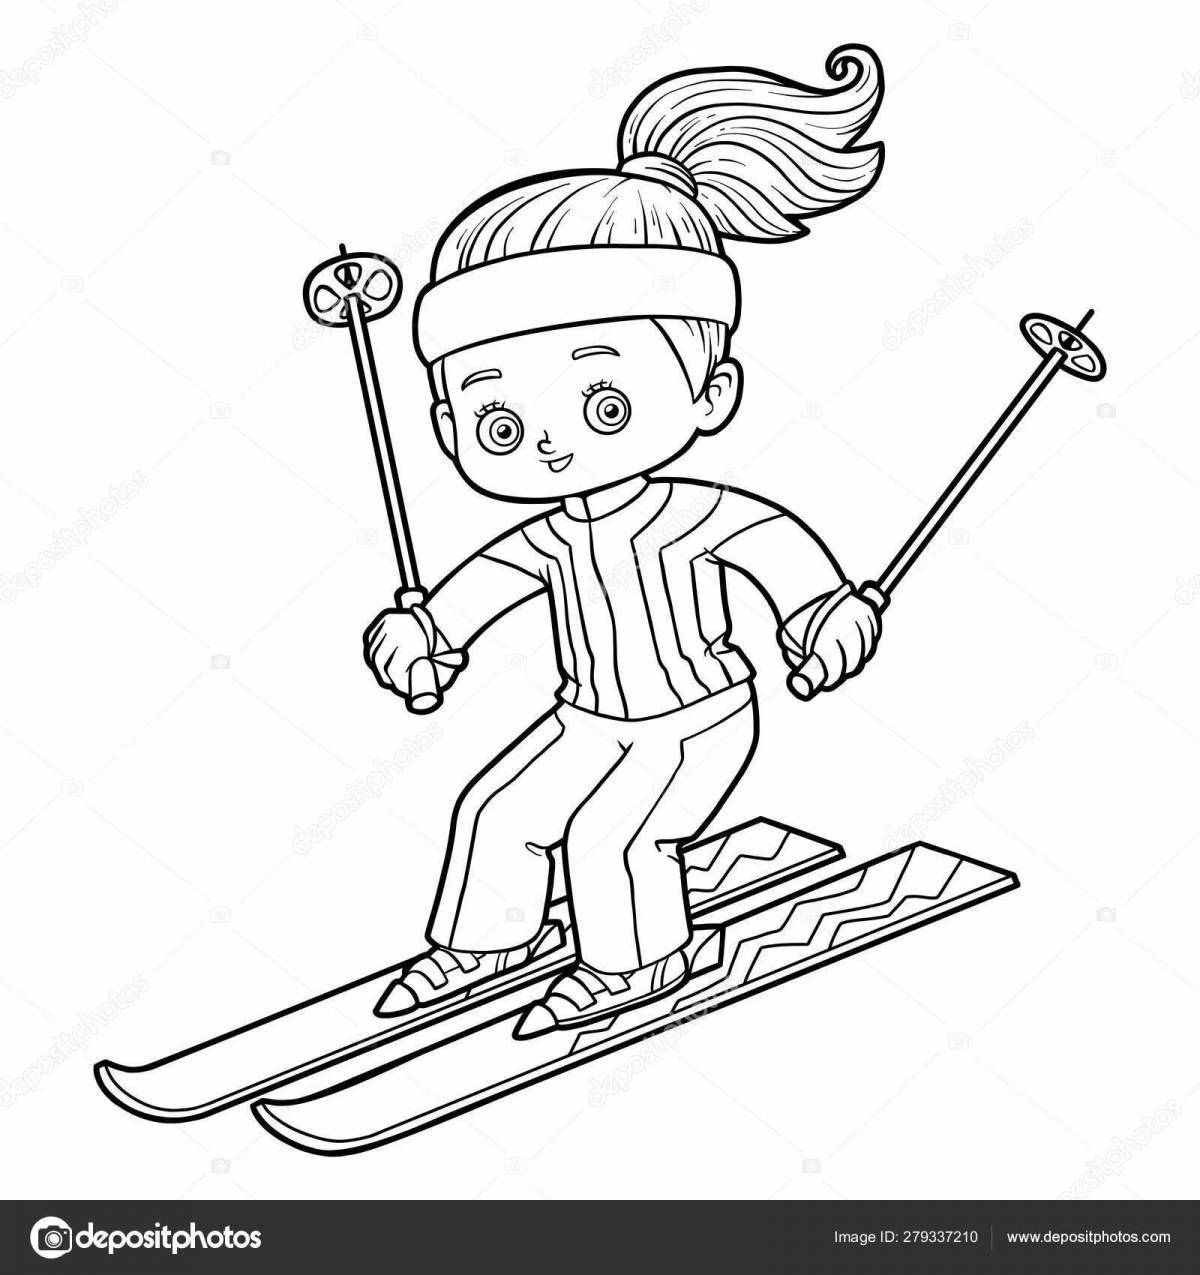 Live skier coloring for kids